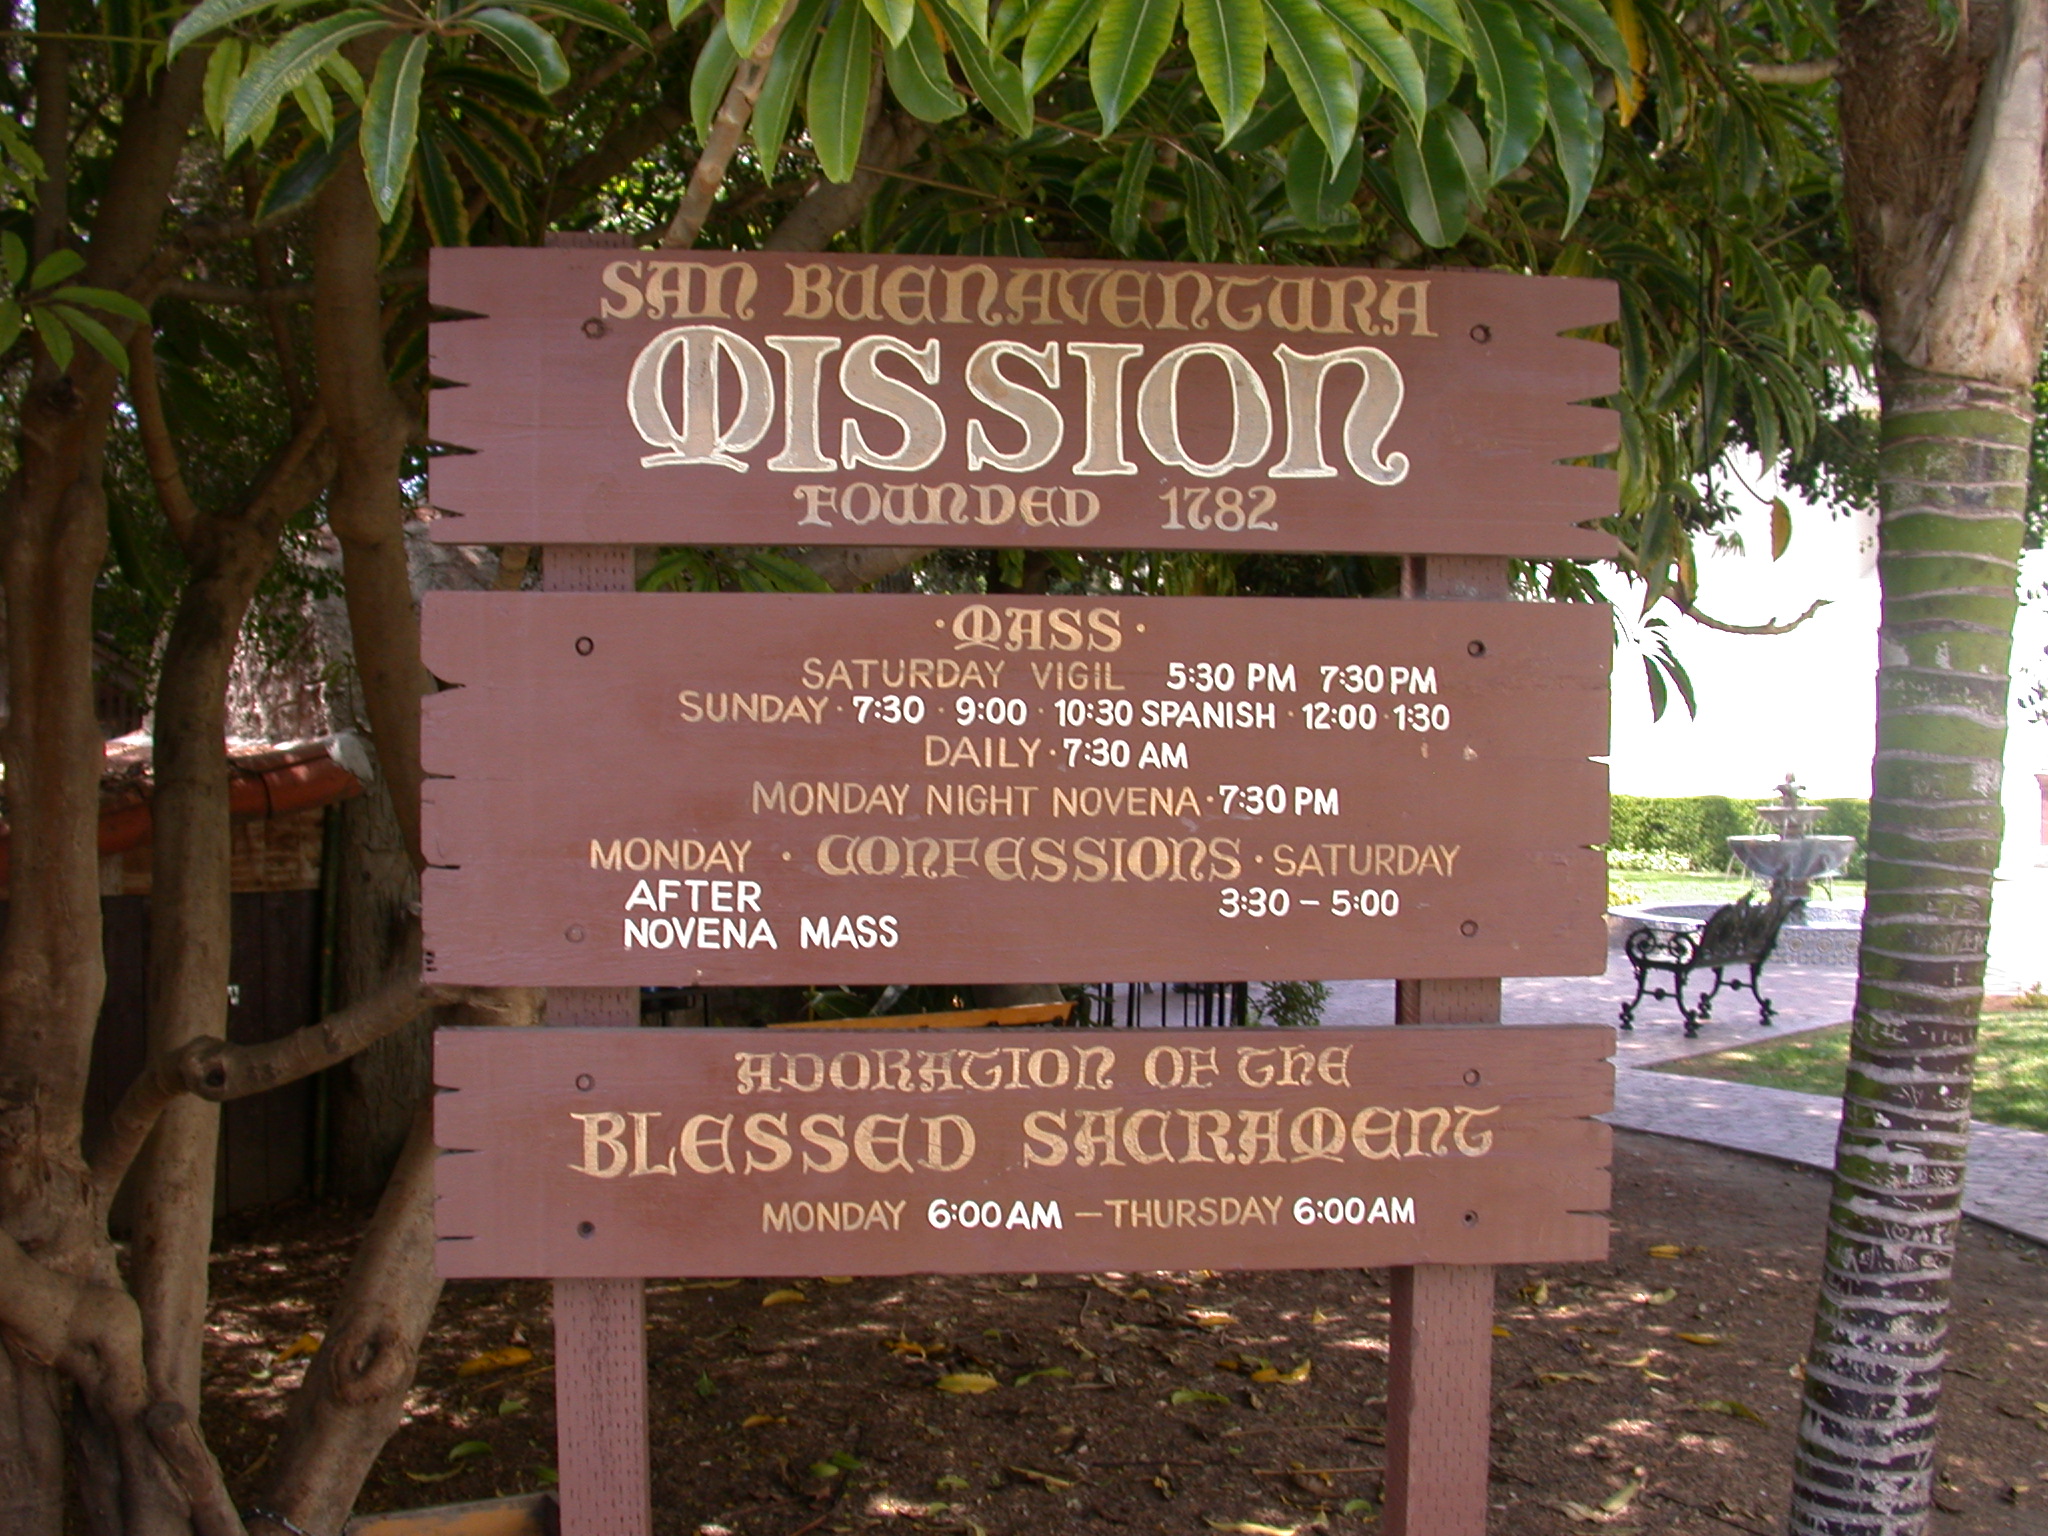 Mission Sign